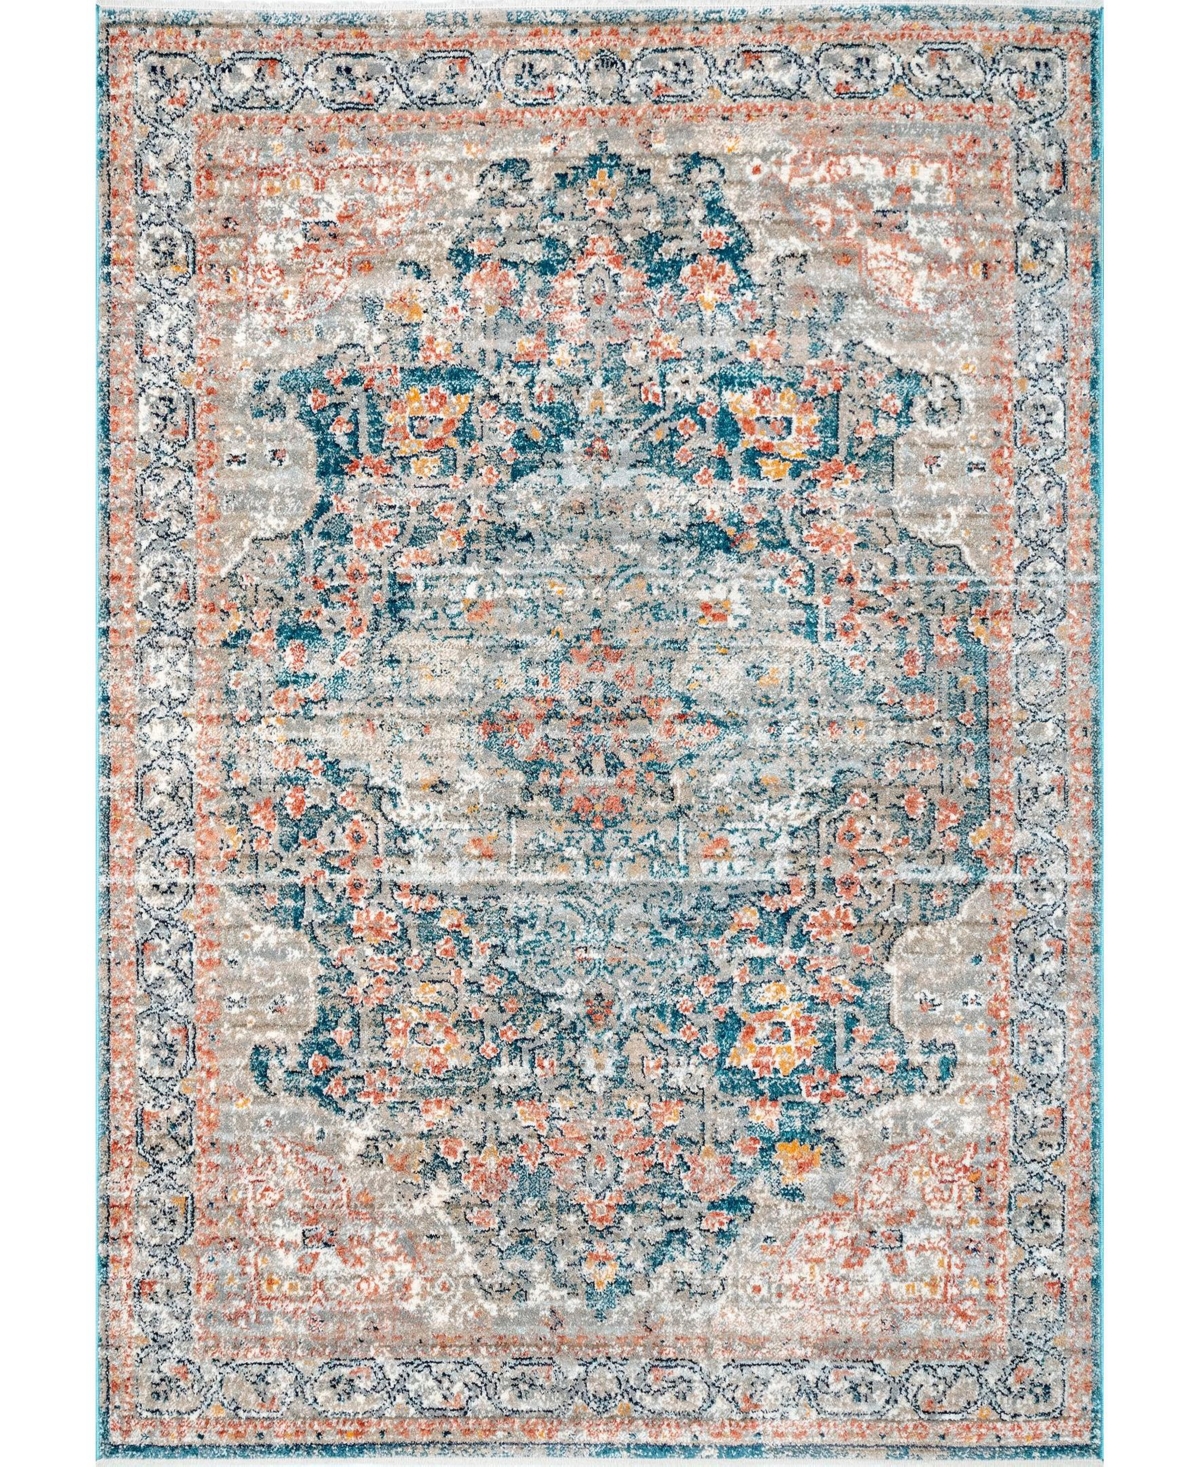 nuLoom Delicate Chanda Persian Vintage-Inspired Blue 8' x 10' Area Rug - Blue